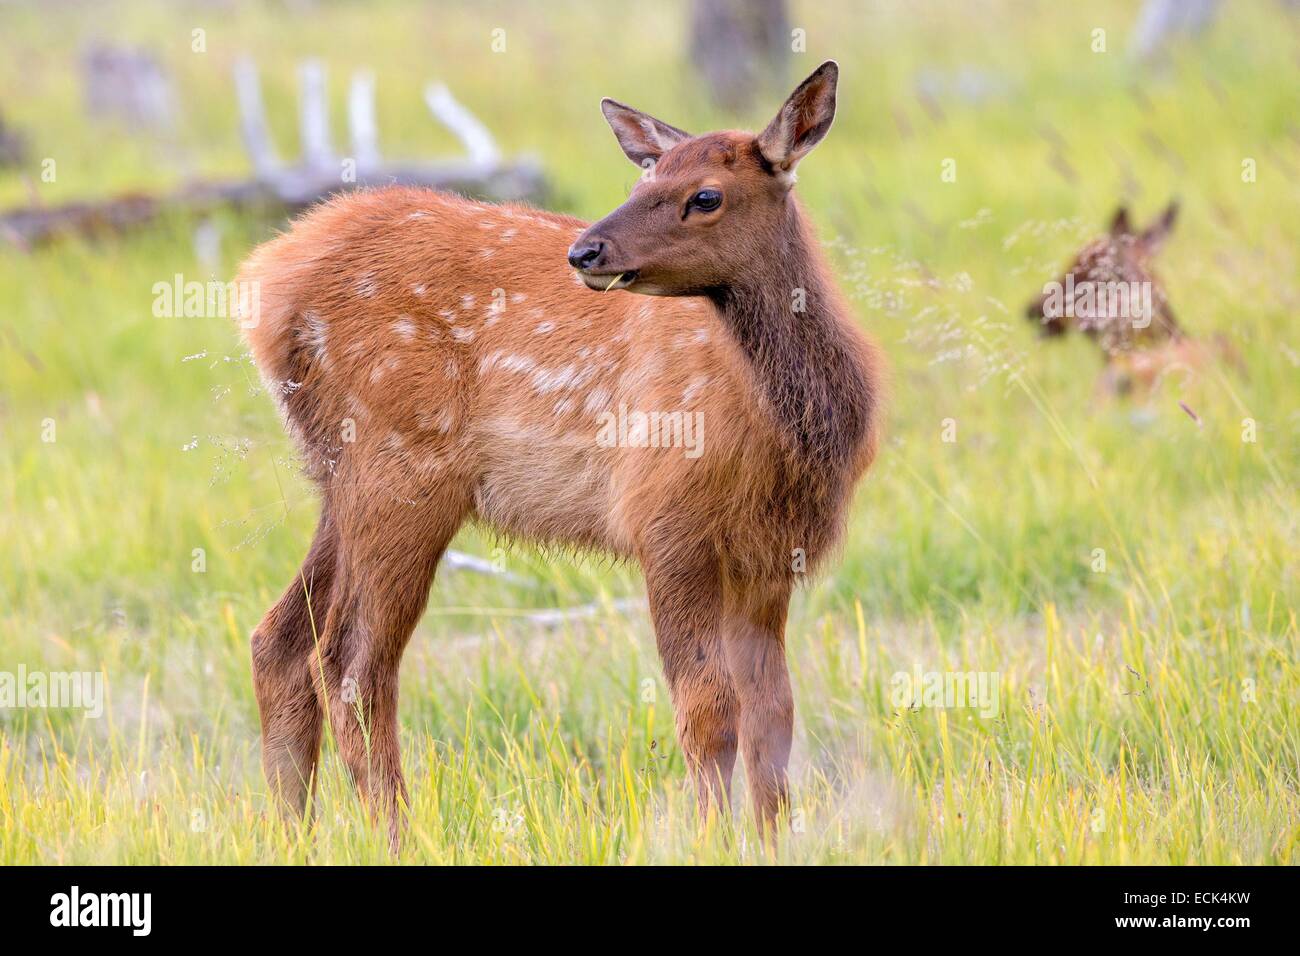 United States, Alaska, Anchorage, Alaska Wildlife Conservation Center, Elk or Wapiti (Cervus canadensis), young Stock Photo